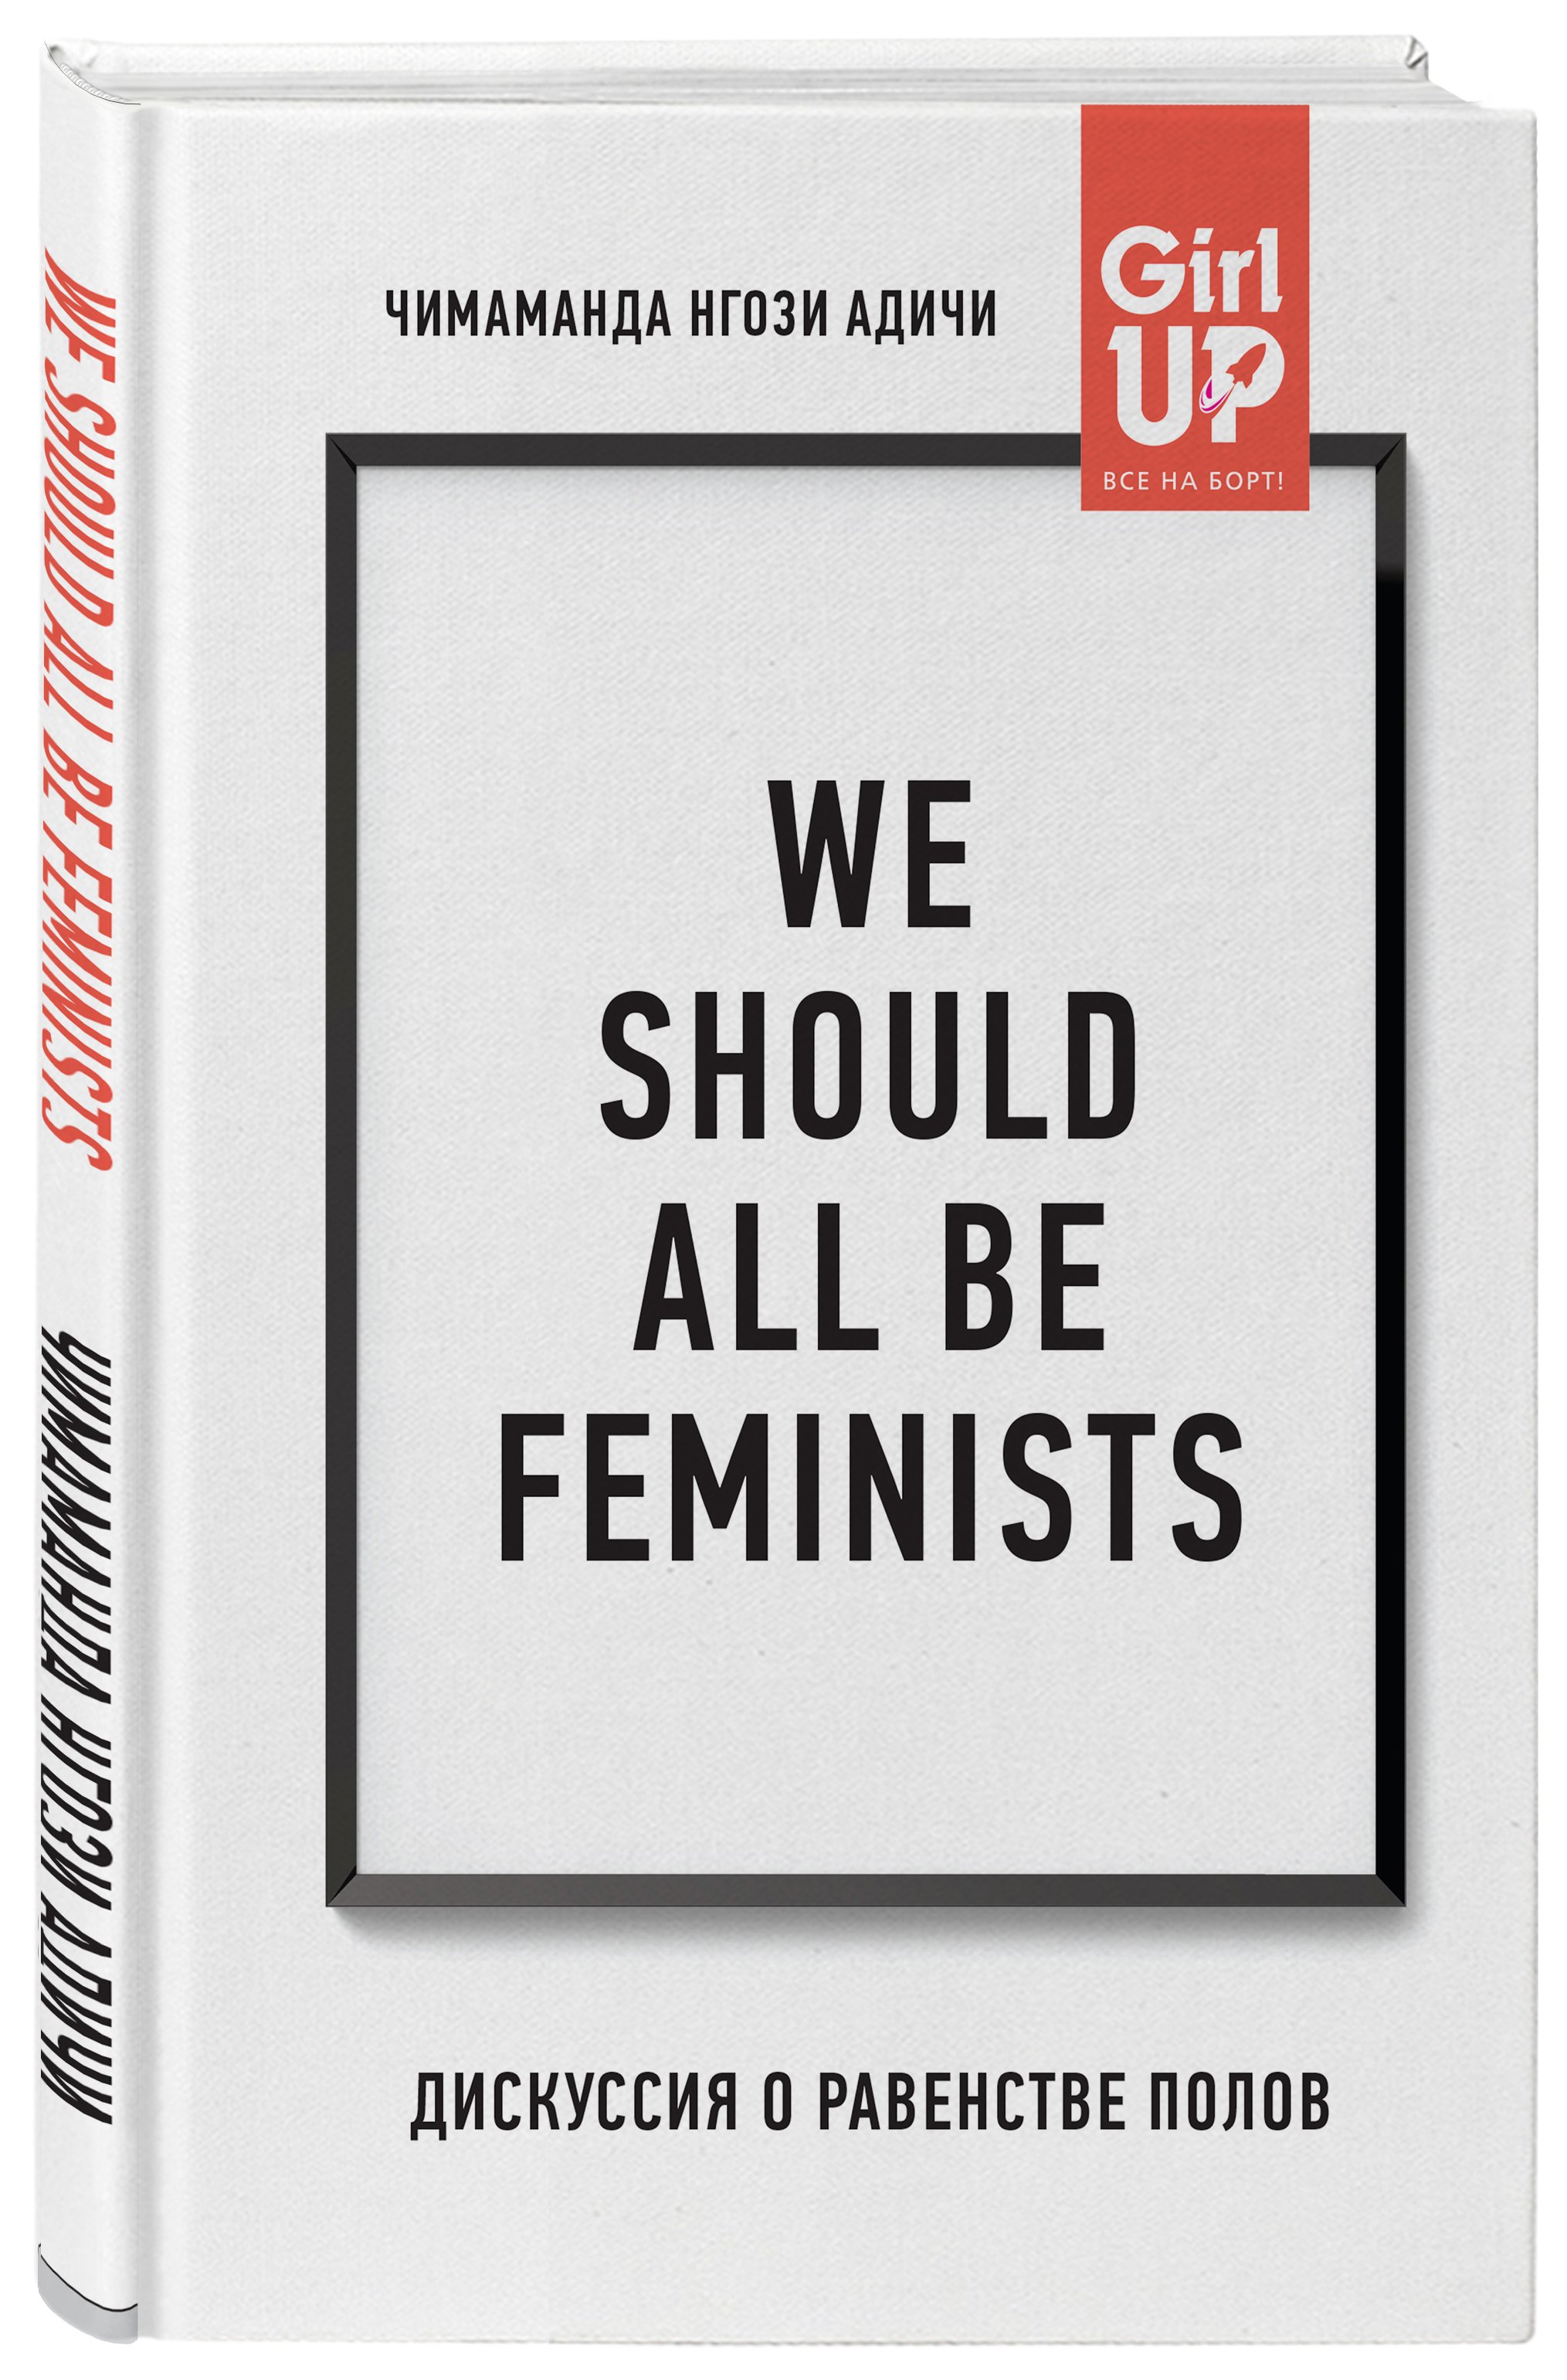 We should all be feminists. Дискуссия о равенстве полов. Адичи Нгози Чимаманда